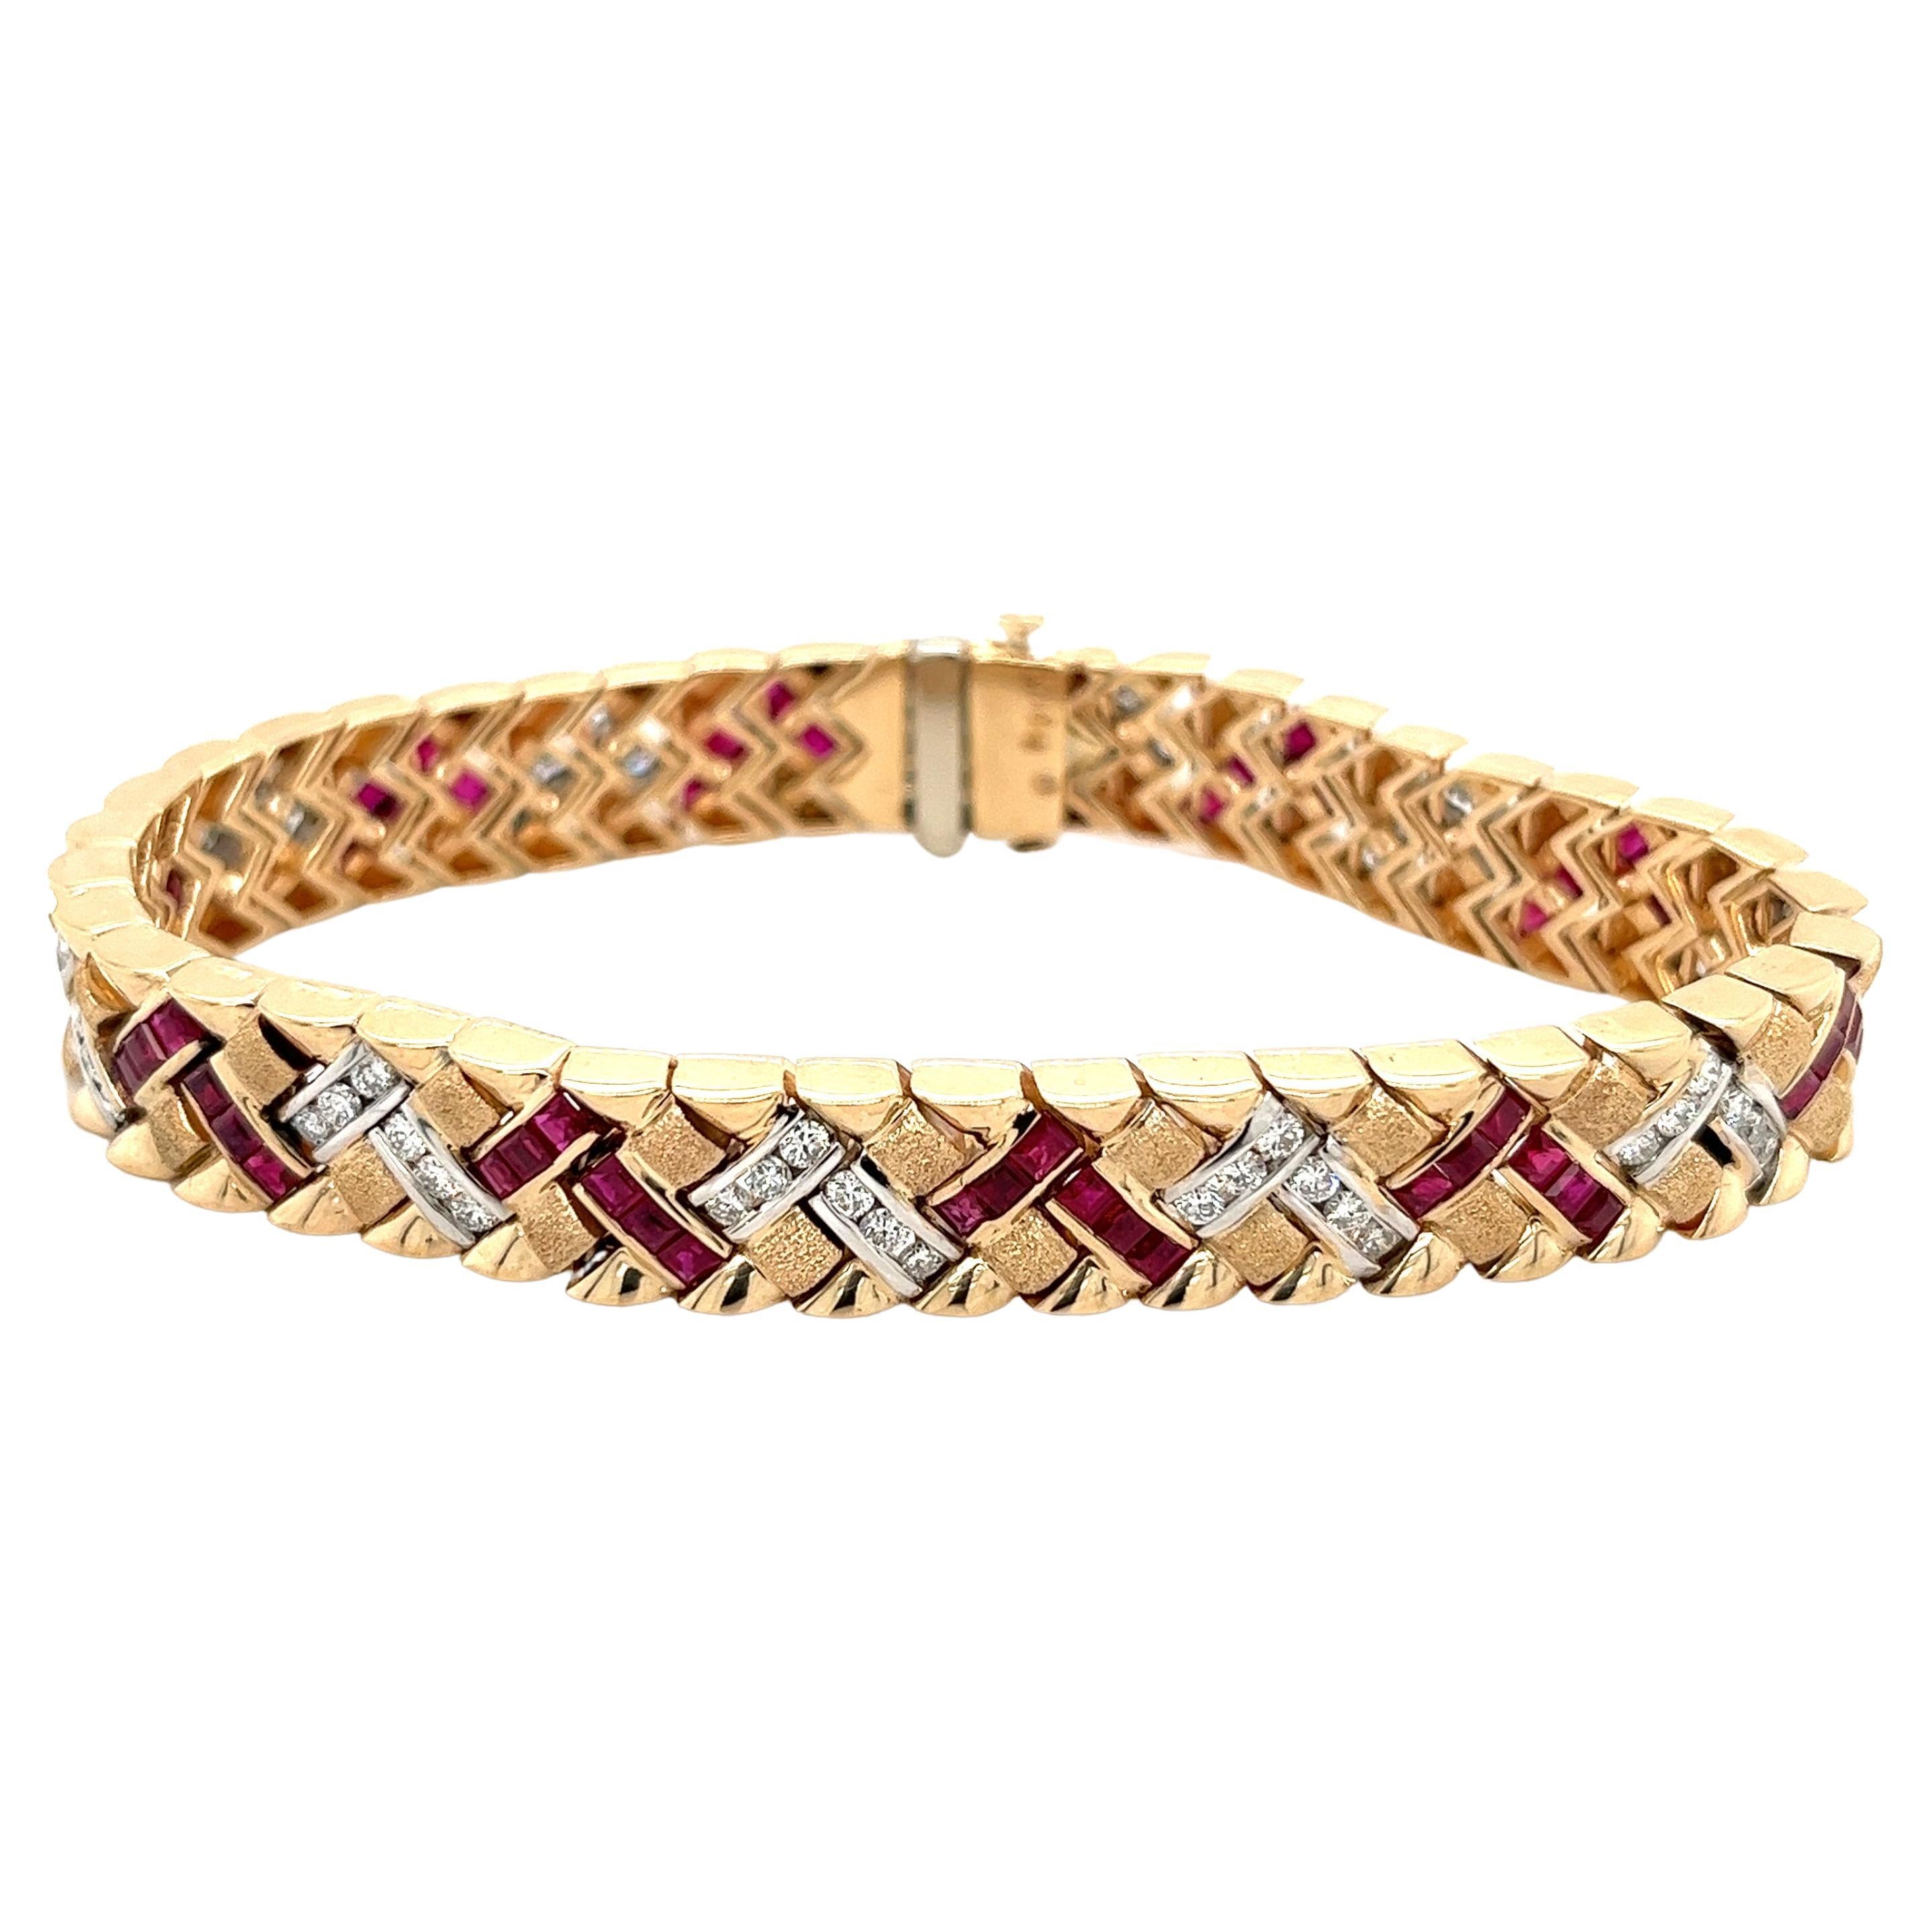 Vintage Art Deco Inspired Ruby and Diamond Matte Gold Finish Bracelet in 14k